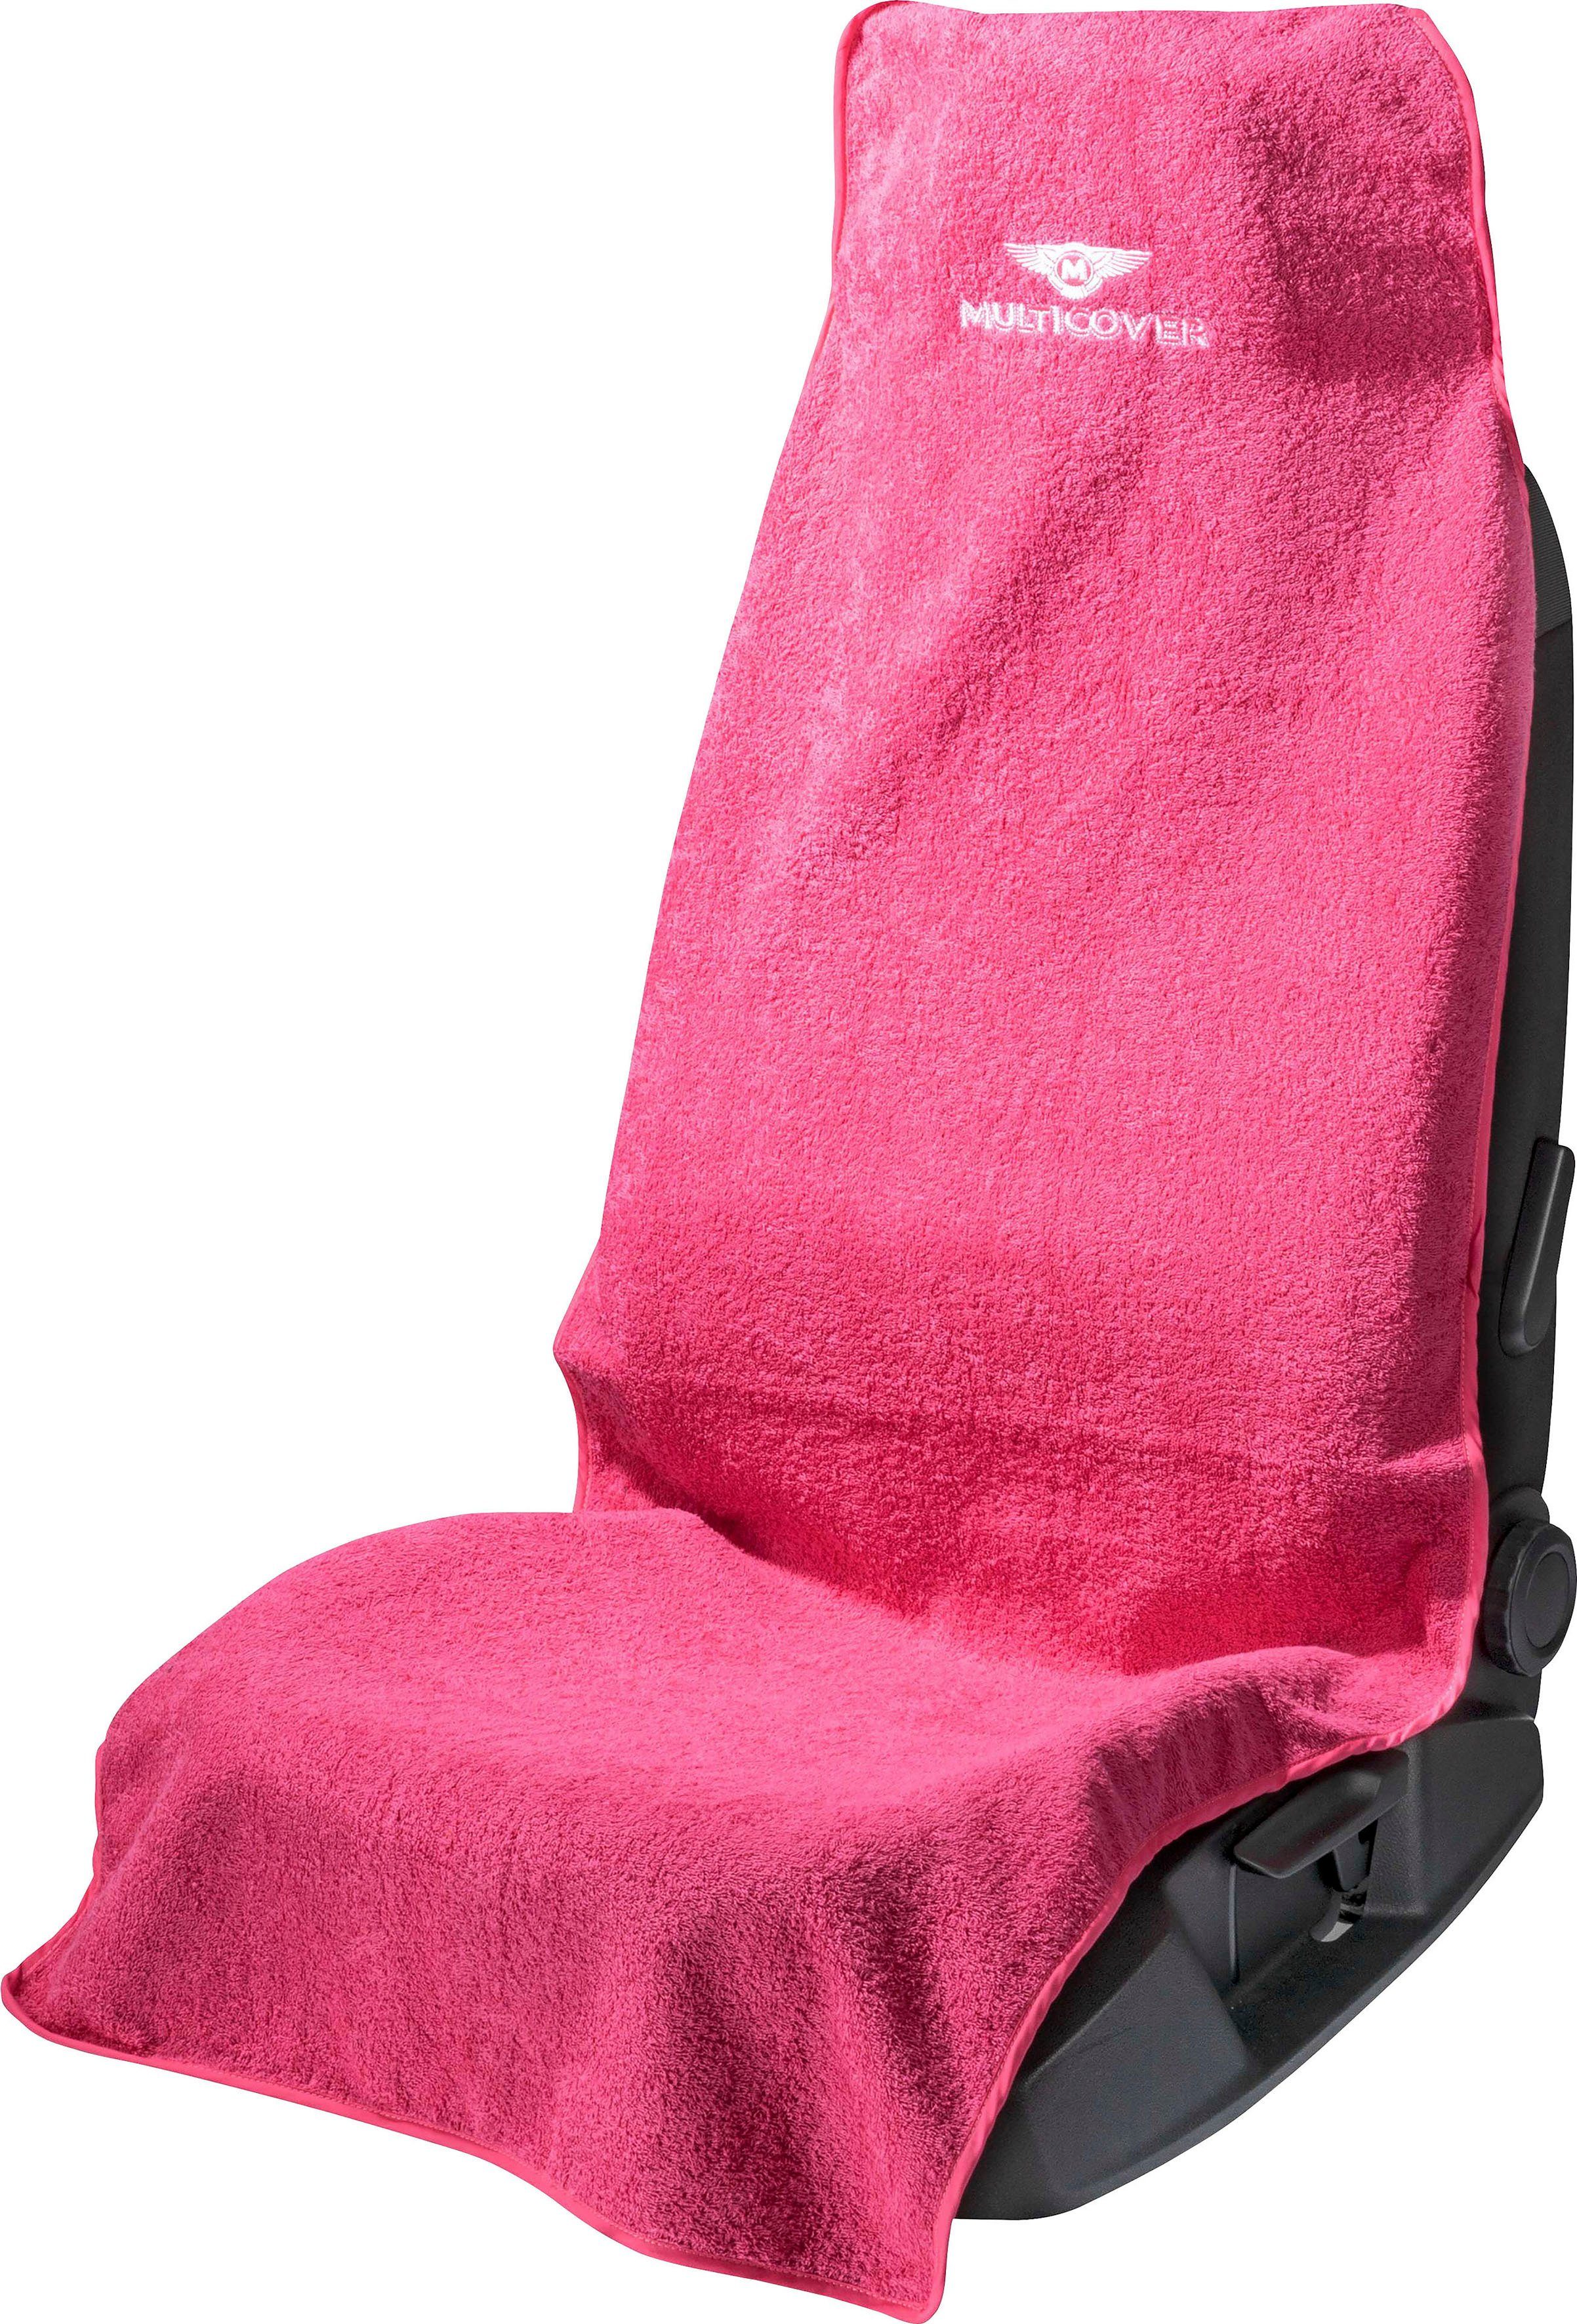 WALSER Autositzbezug Multicover pink